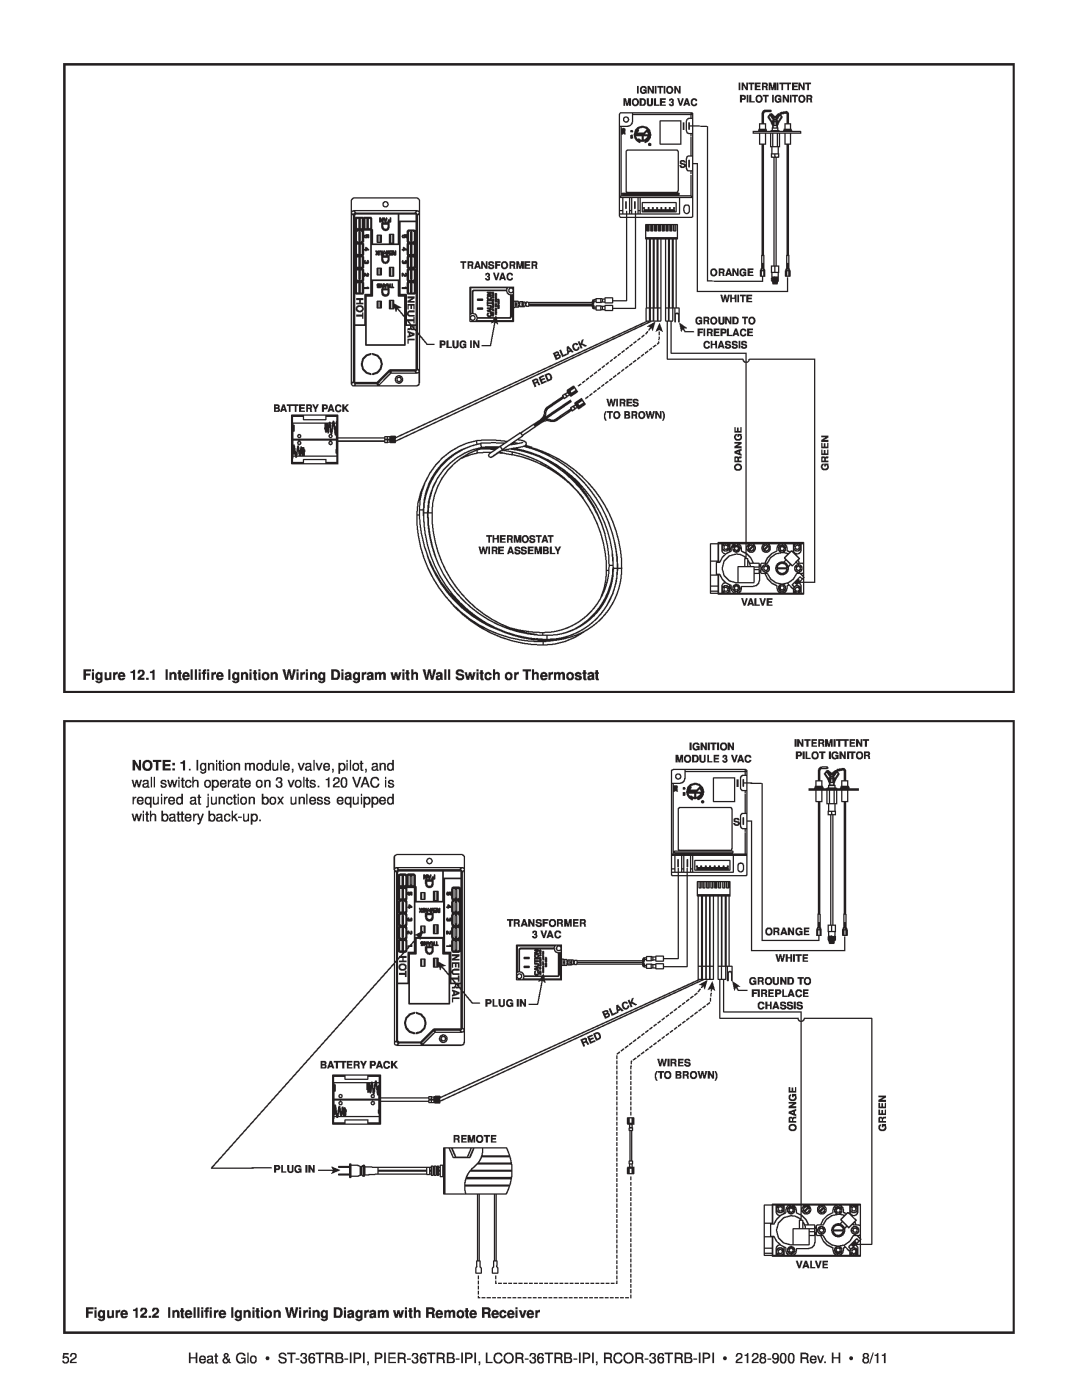 Heat & Glo LifeStyle ST-36TRB-IPI owner manual Figure 